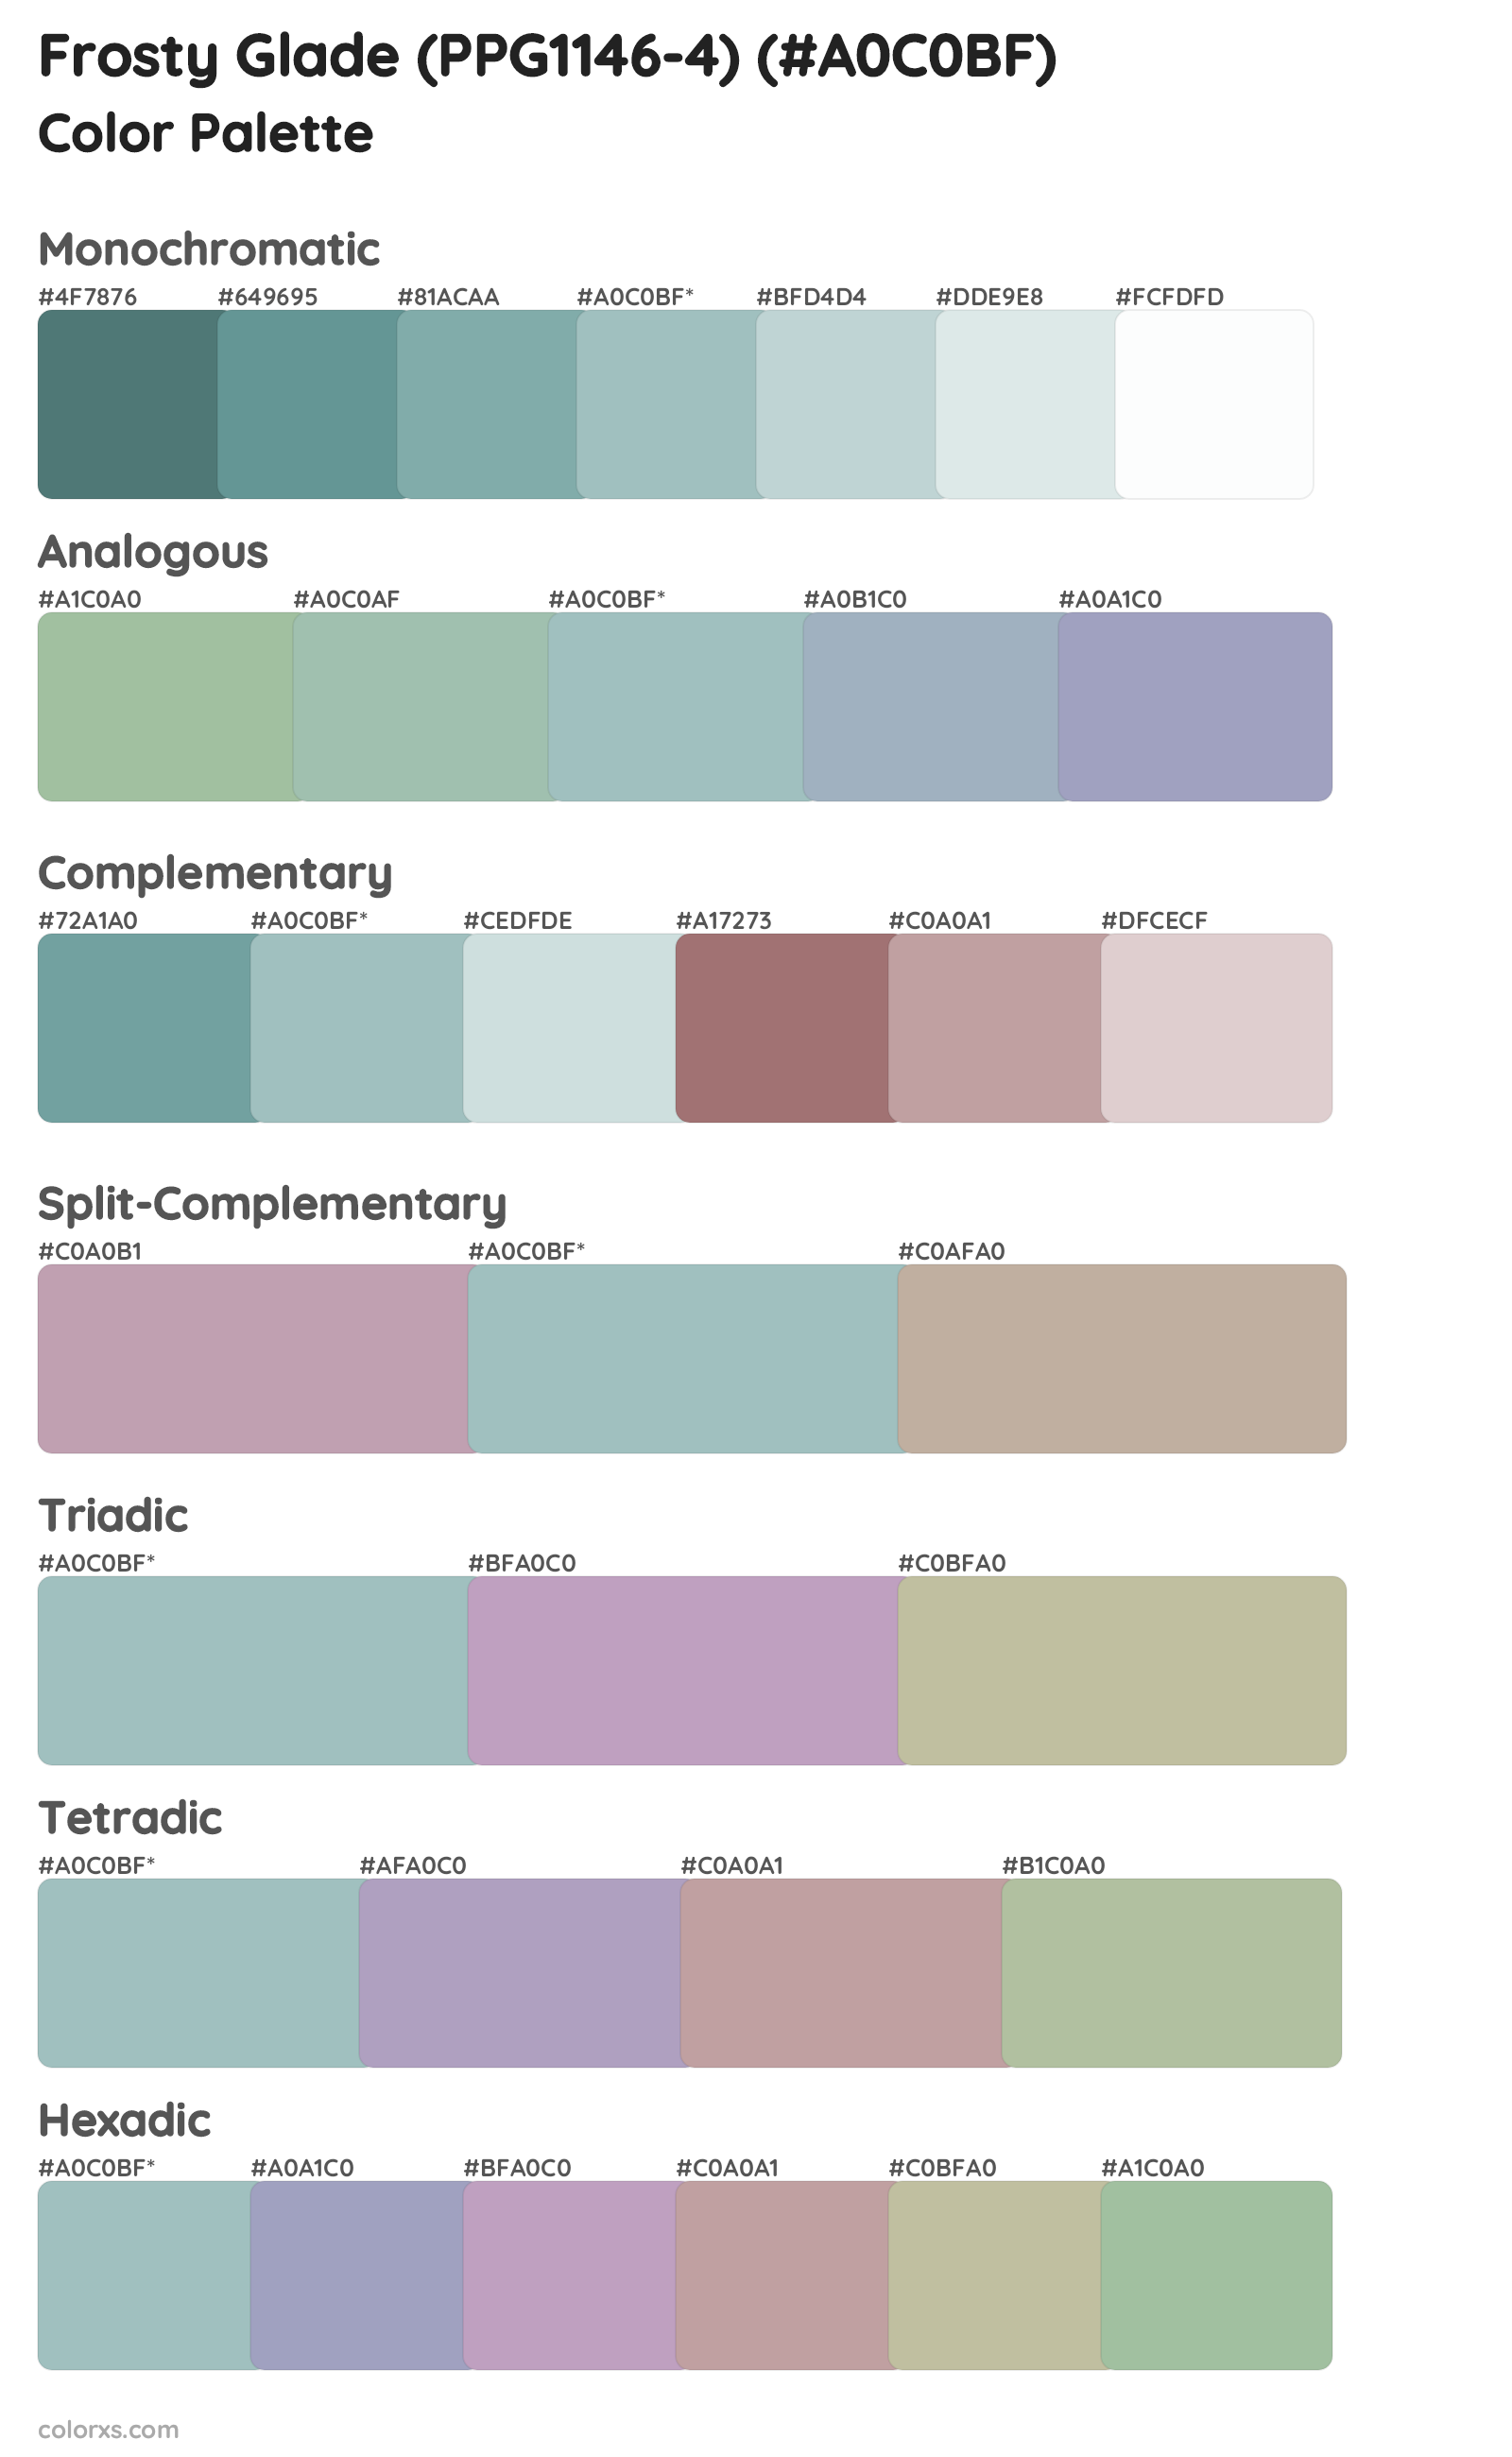 Frosty Glade (PPG1146-4) Color Scheme Palettes